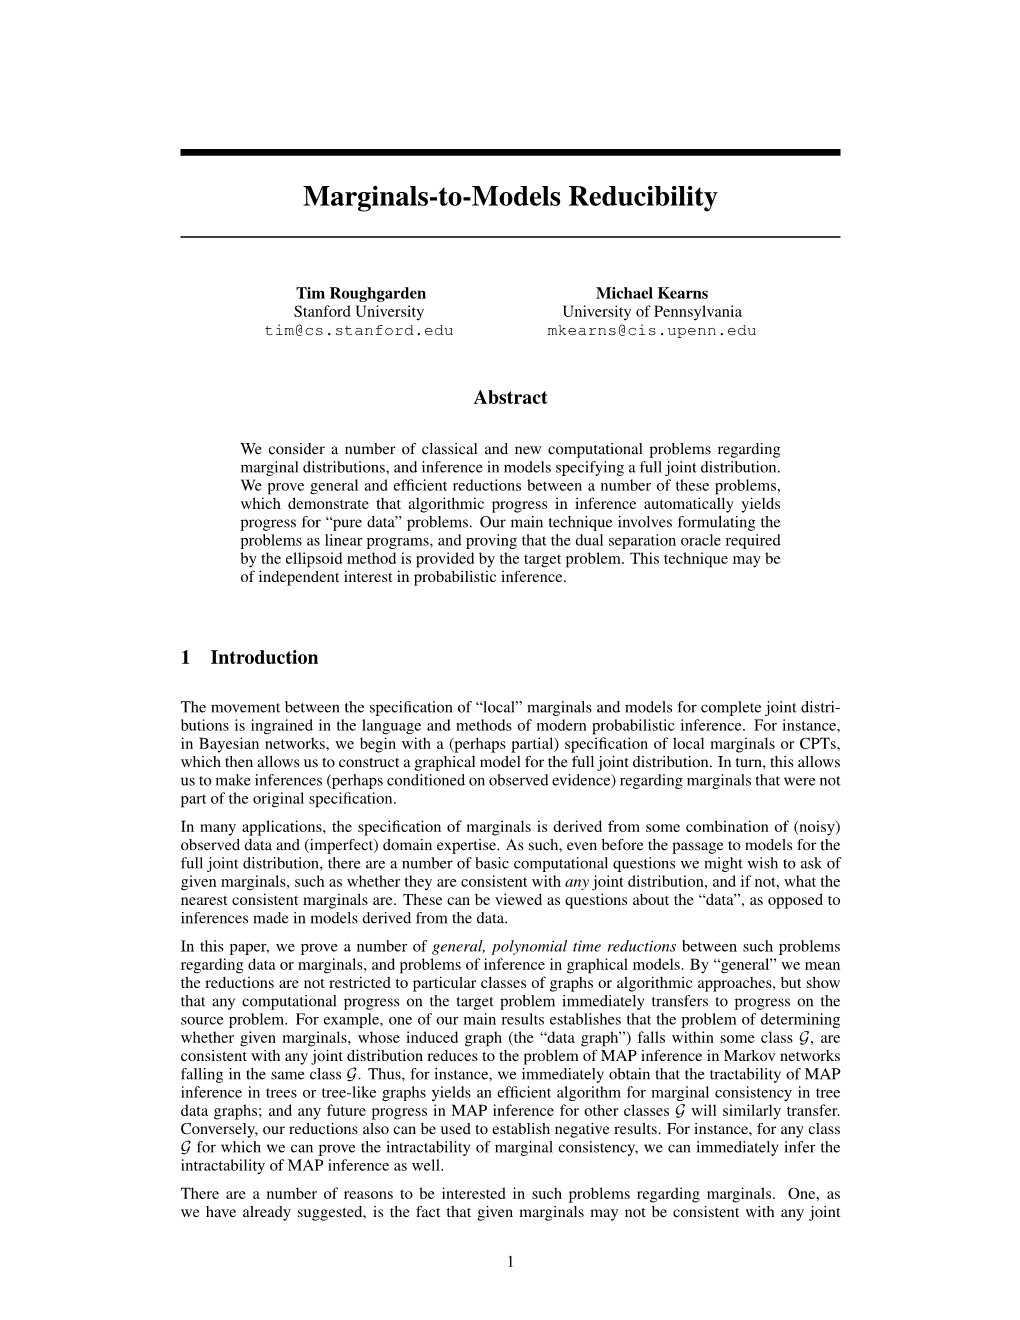 Marginals-To-Models Reducibility